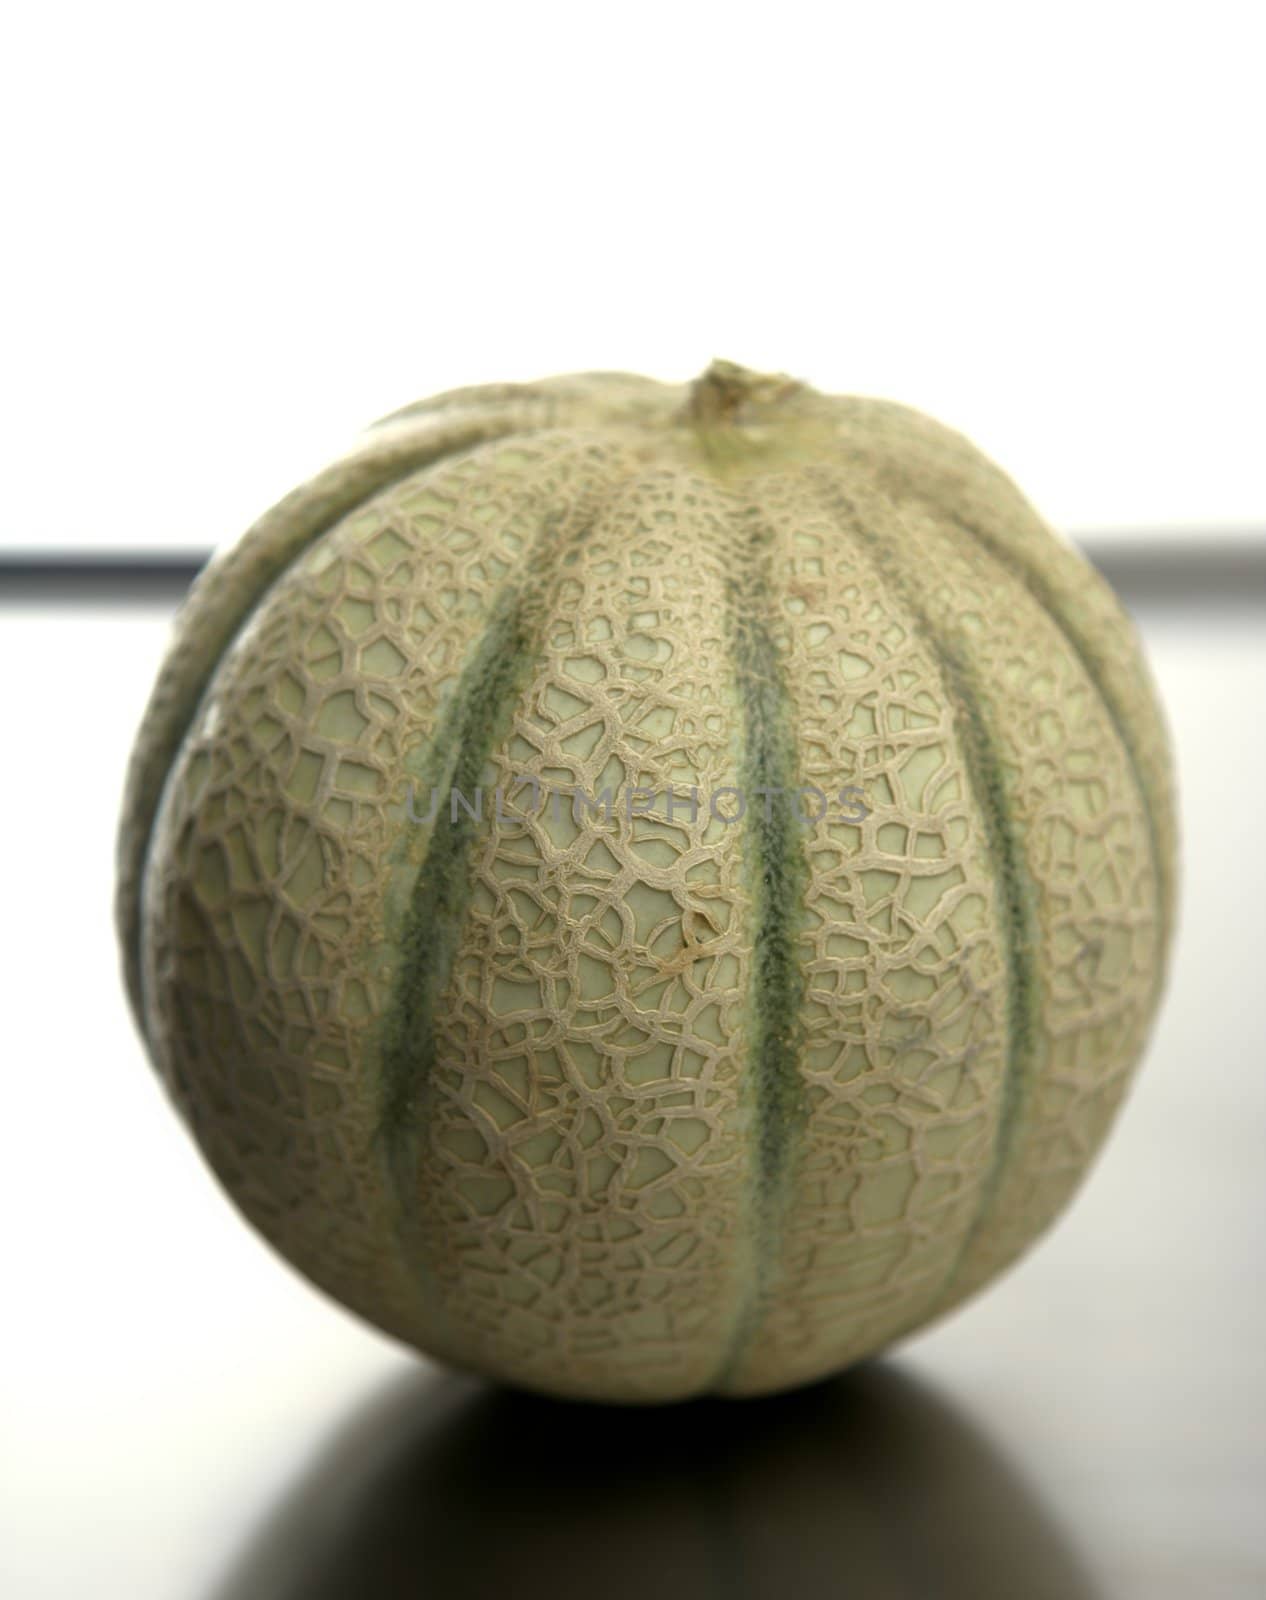 Melon fruit by lunamarina